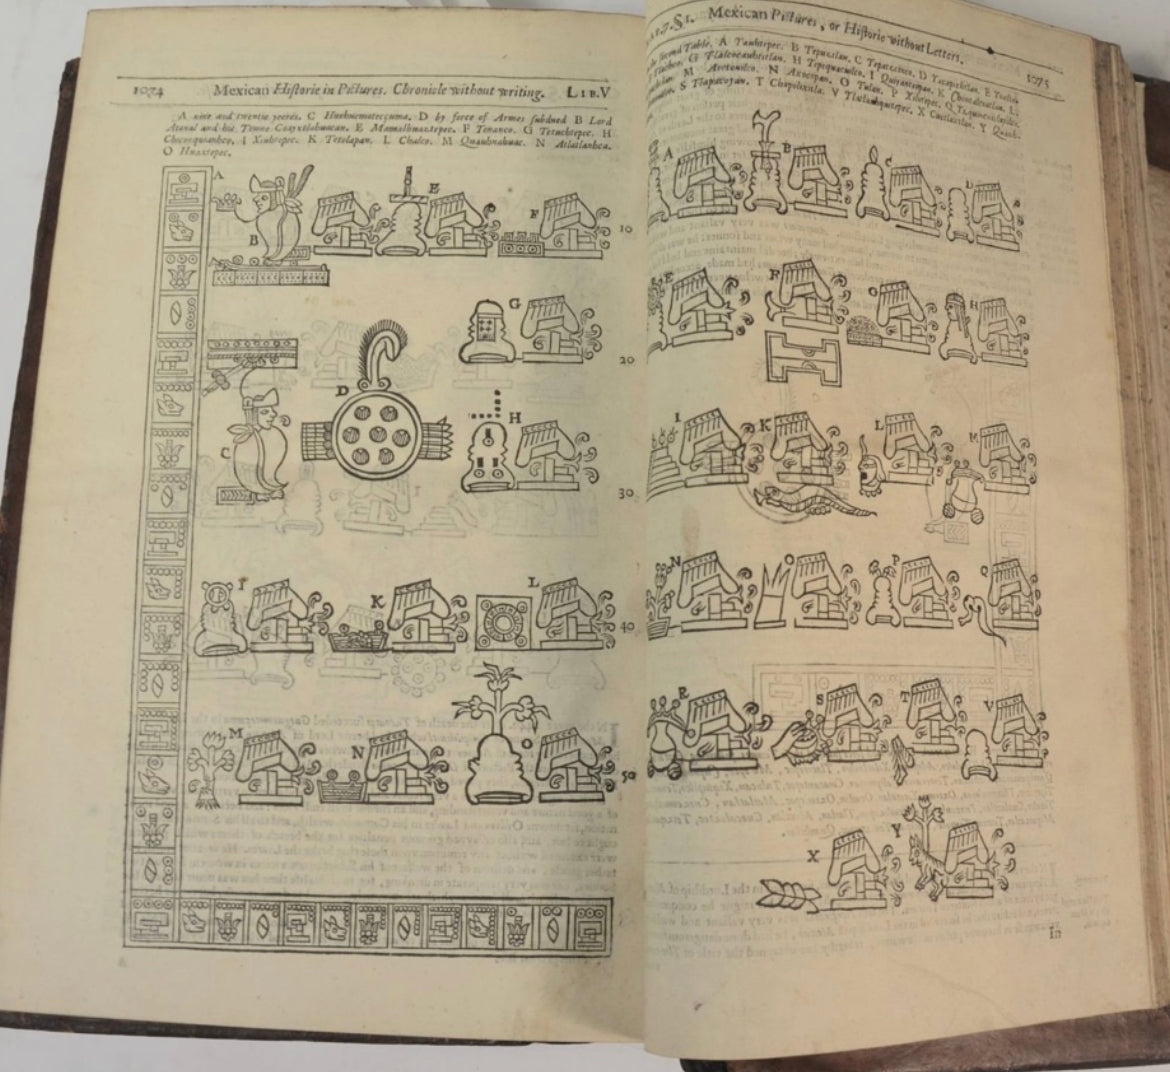 Purchas his Pilgrimes - 1625 - Codex Mendoza